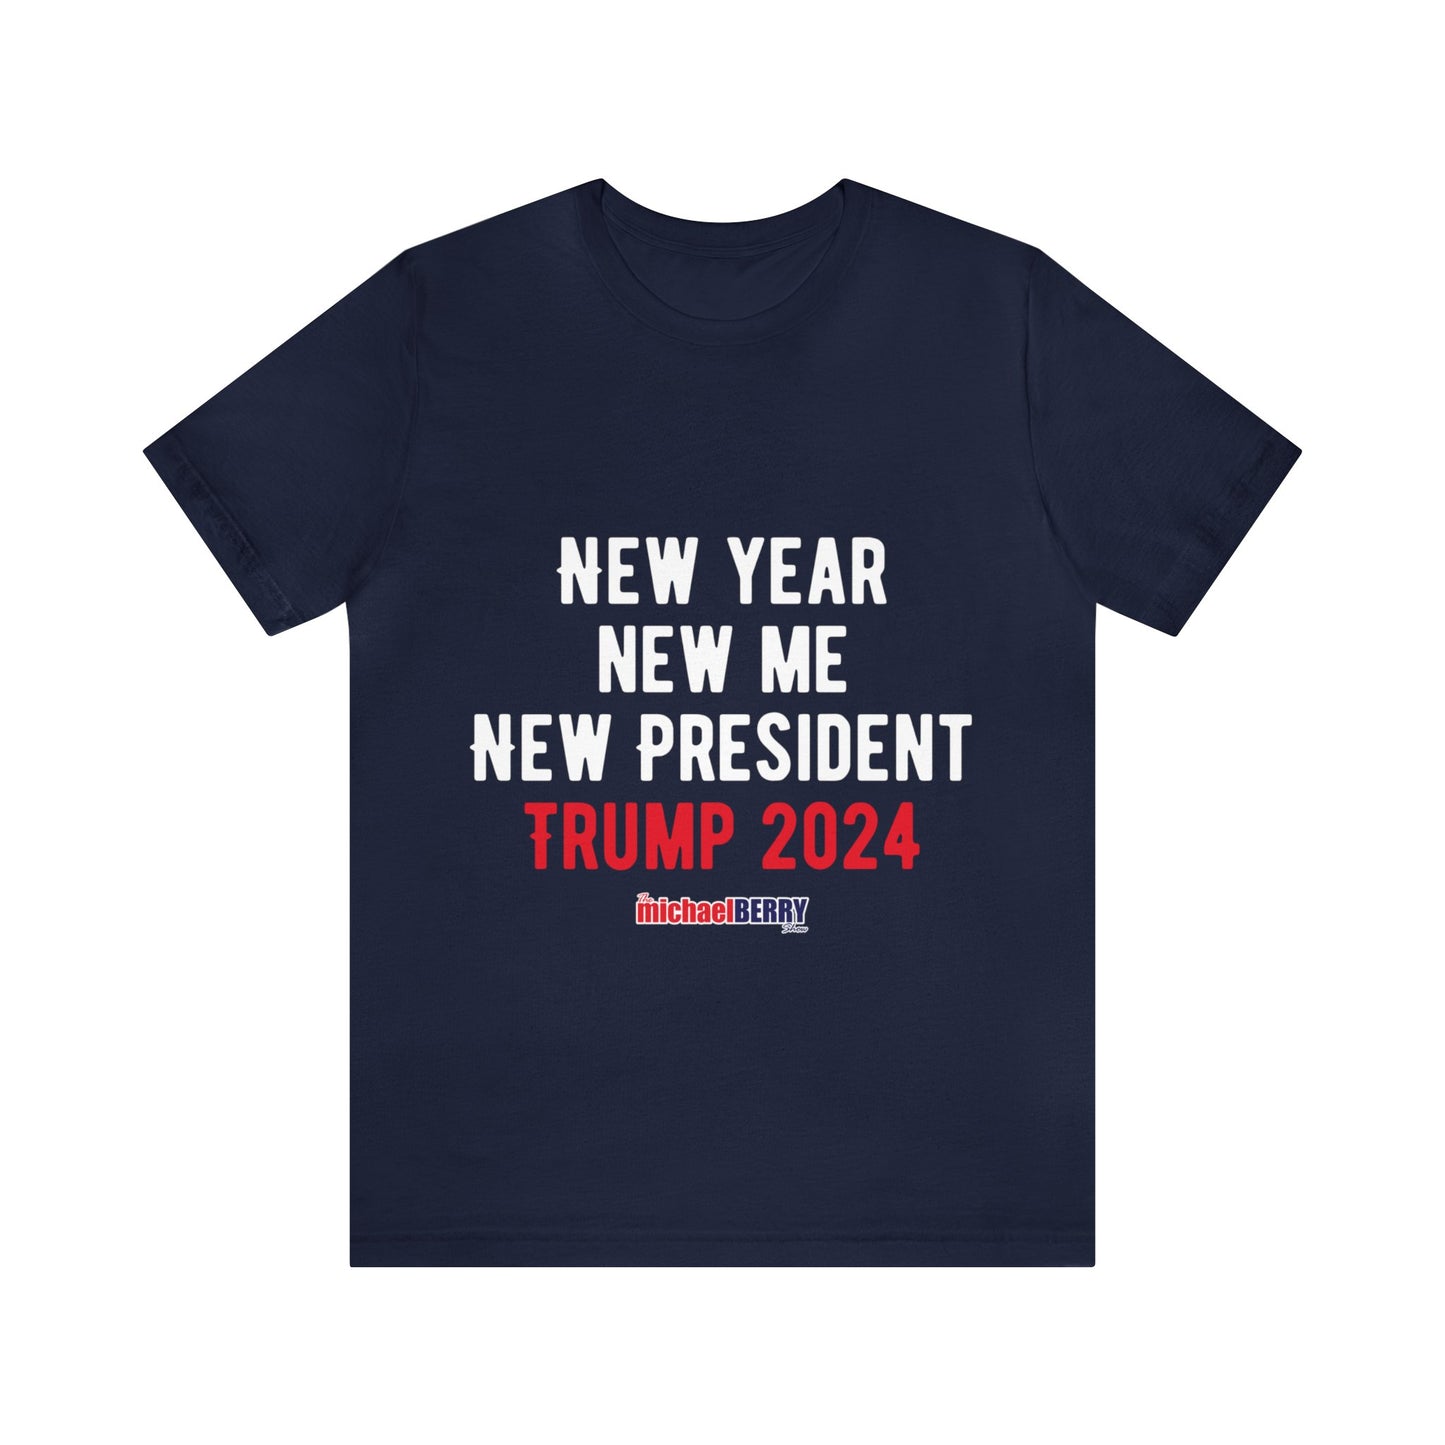 New Year. New Me. New President. Trump 2024 - Men's Short Sleeve Tee